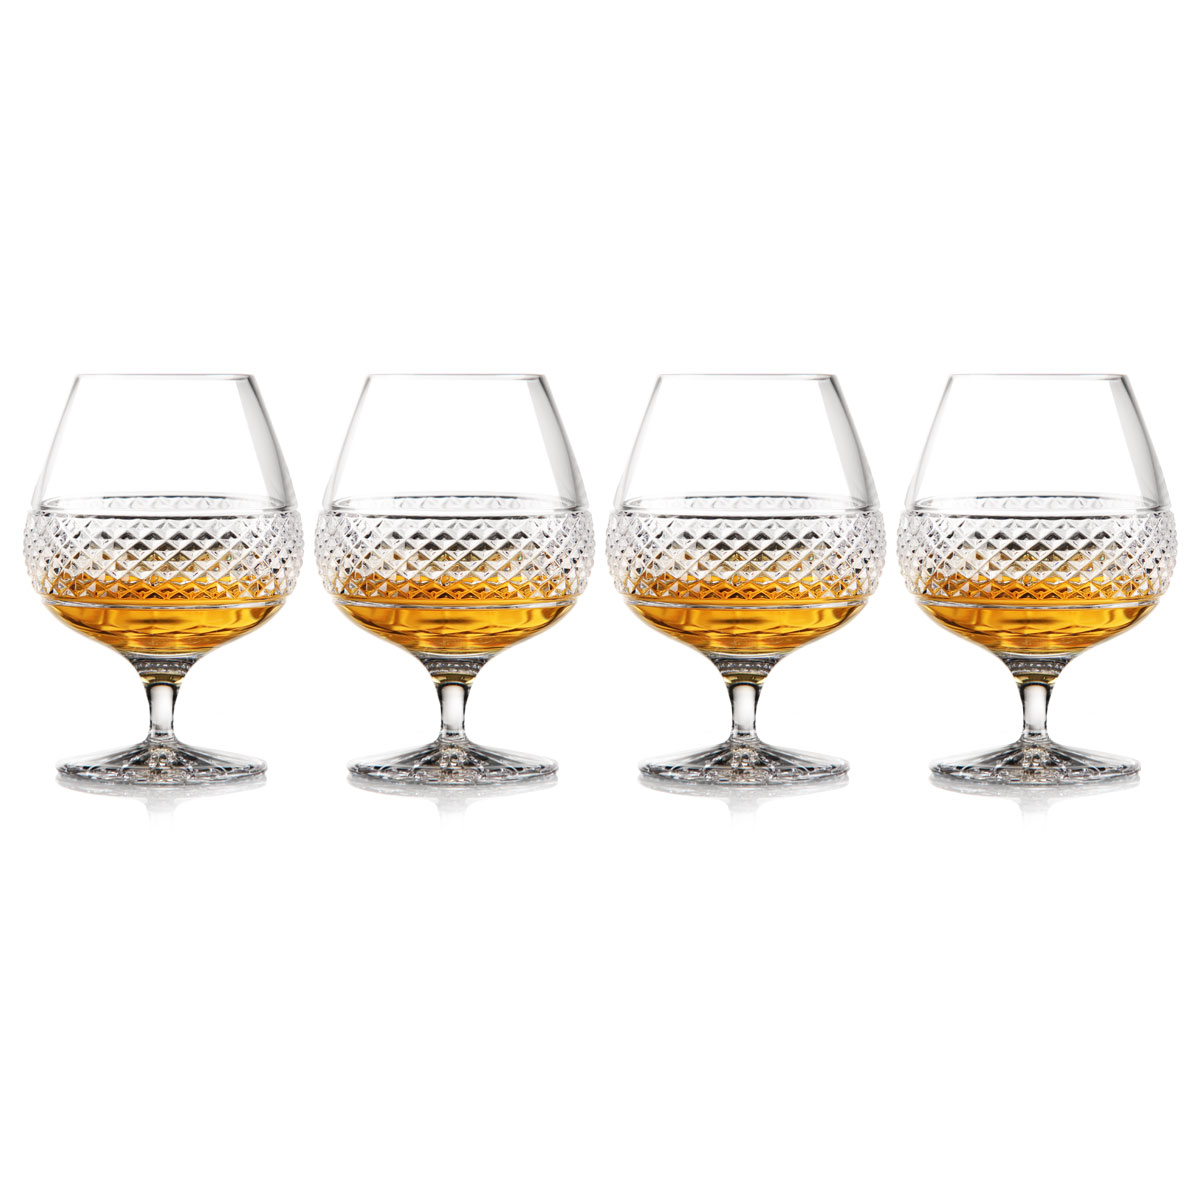 Cashs Ireland, Cooper Large Brandy, Cognac Glasses, Set of 4